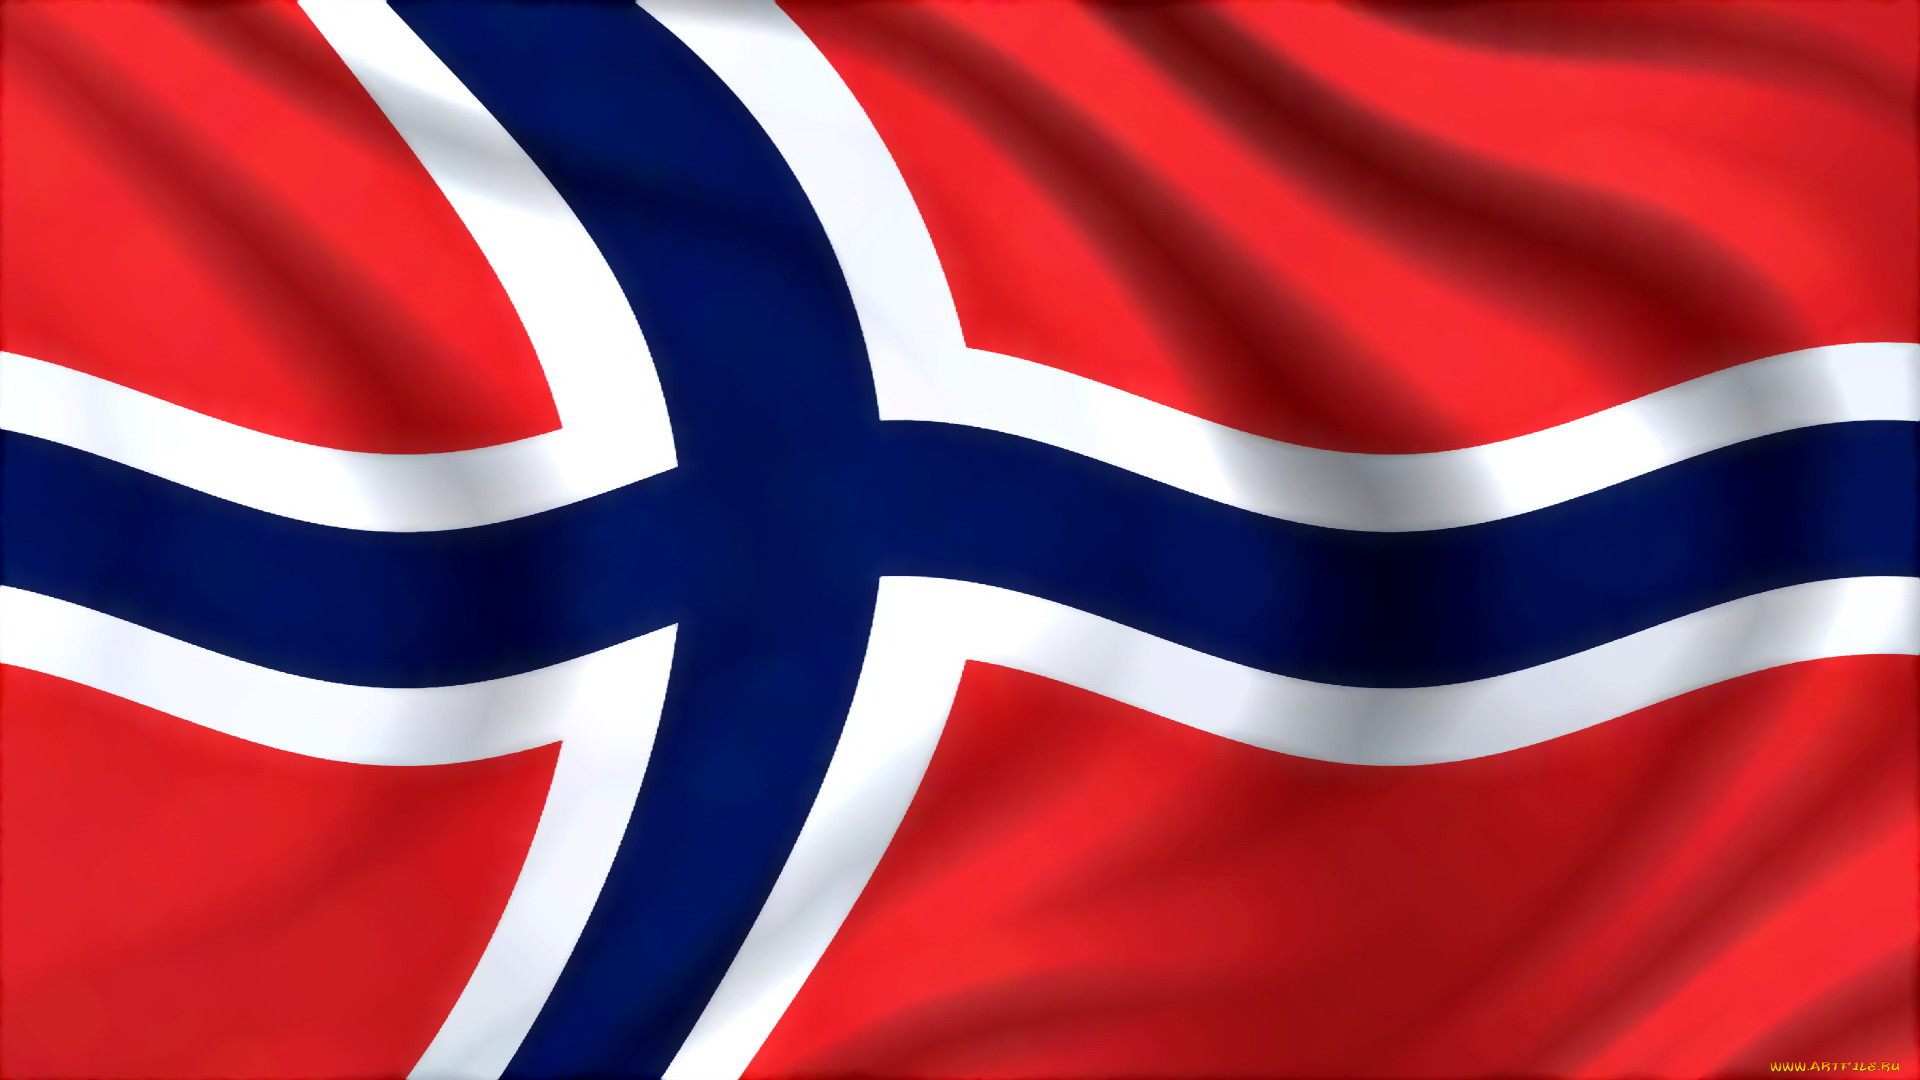 Норвегия флаг и герб. Флаг Норвегия. Государственные символы Норвегии. Символы государства Норвегии. Норвежский флаг и герб.